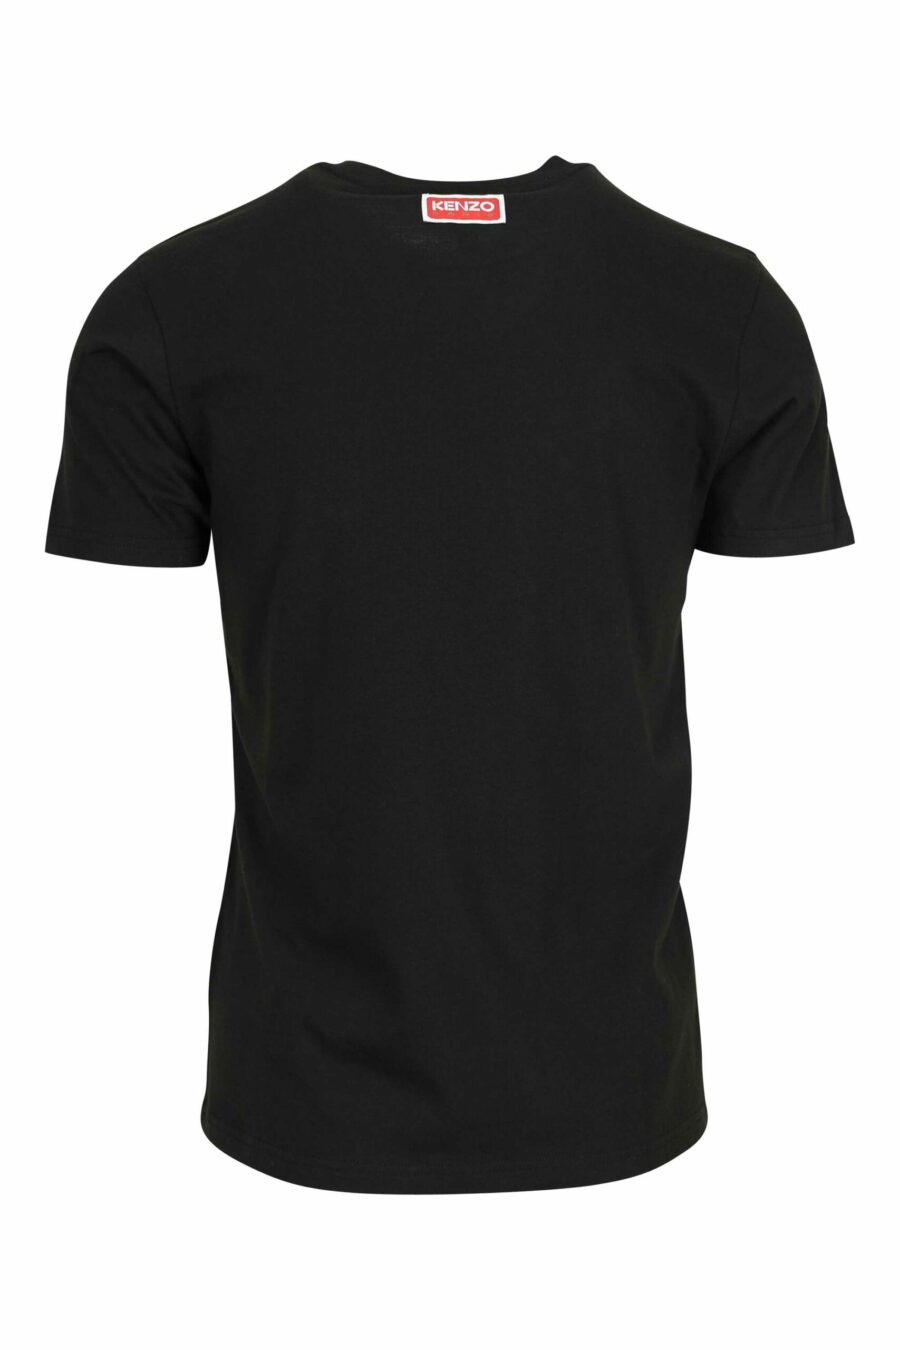 T-shirt "slim" preta com o mini logótipo do tigre - 3612230625020 1 scaled